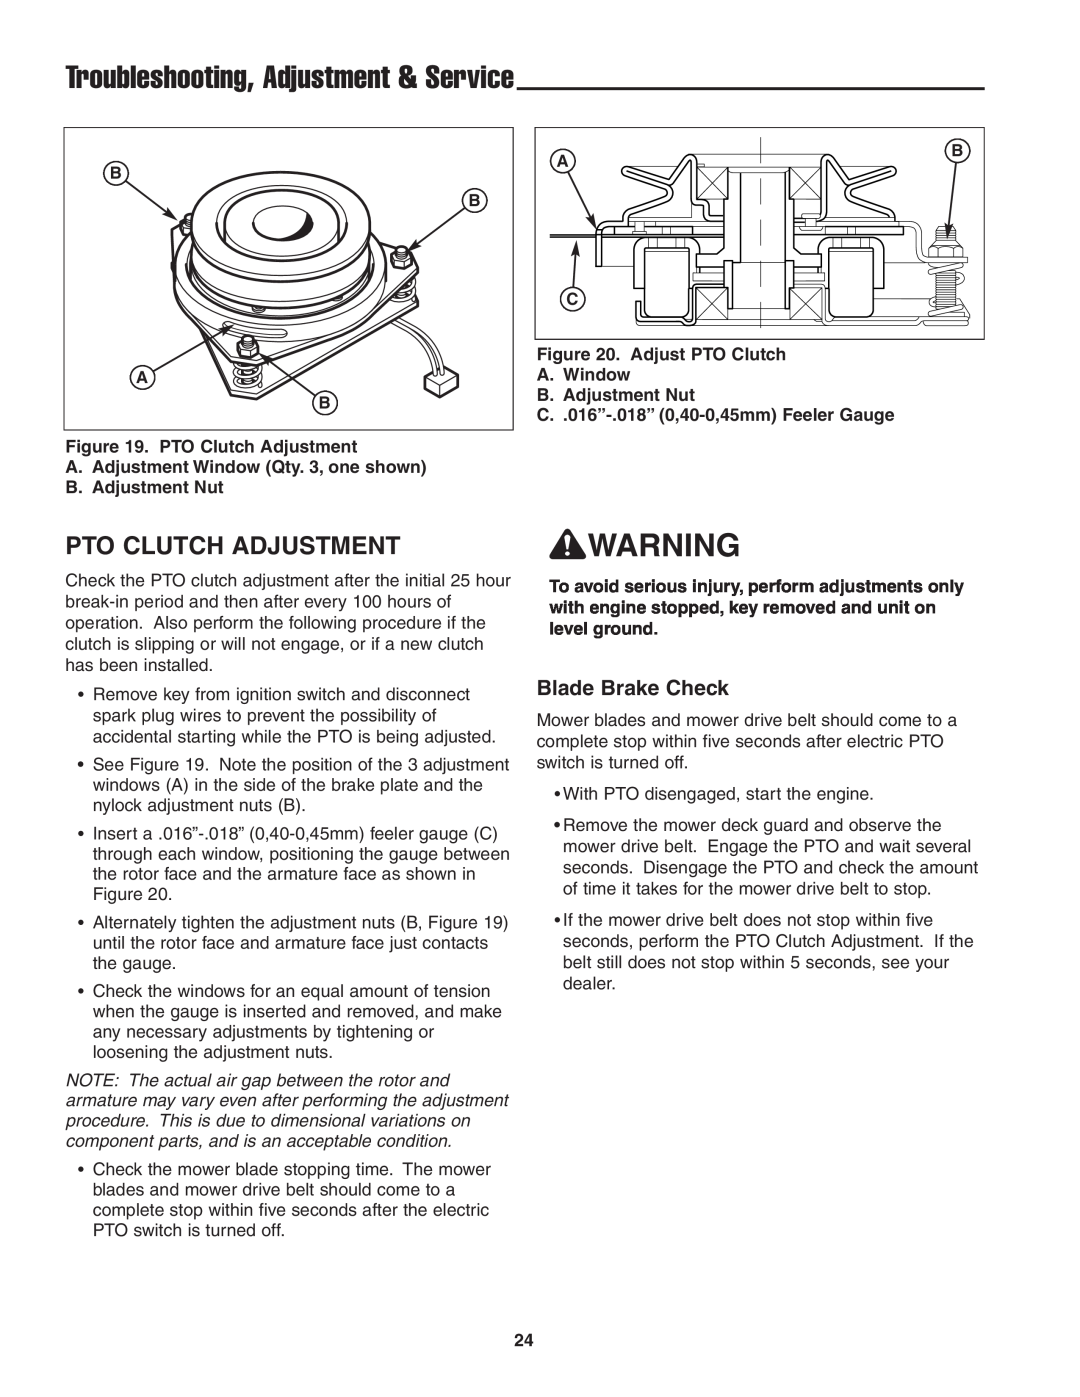 Snapper 13HP manual Pto Clutch Adjustment, Troubleshooting, Adjustment & Service, Blade Brake Check 